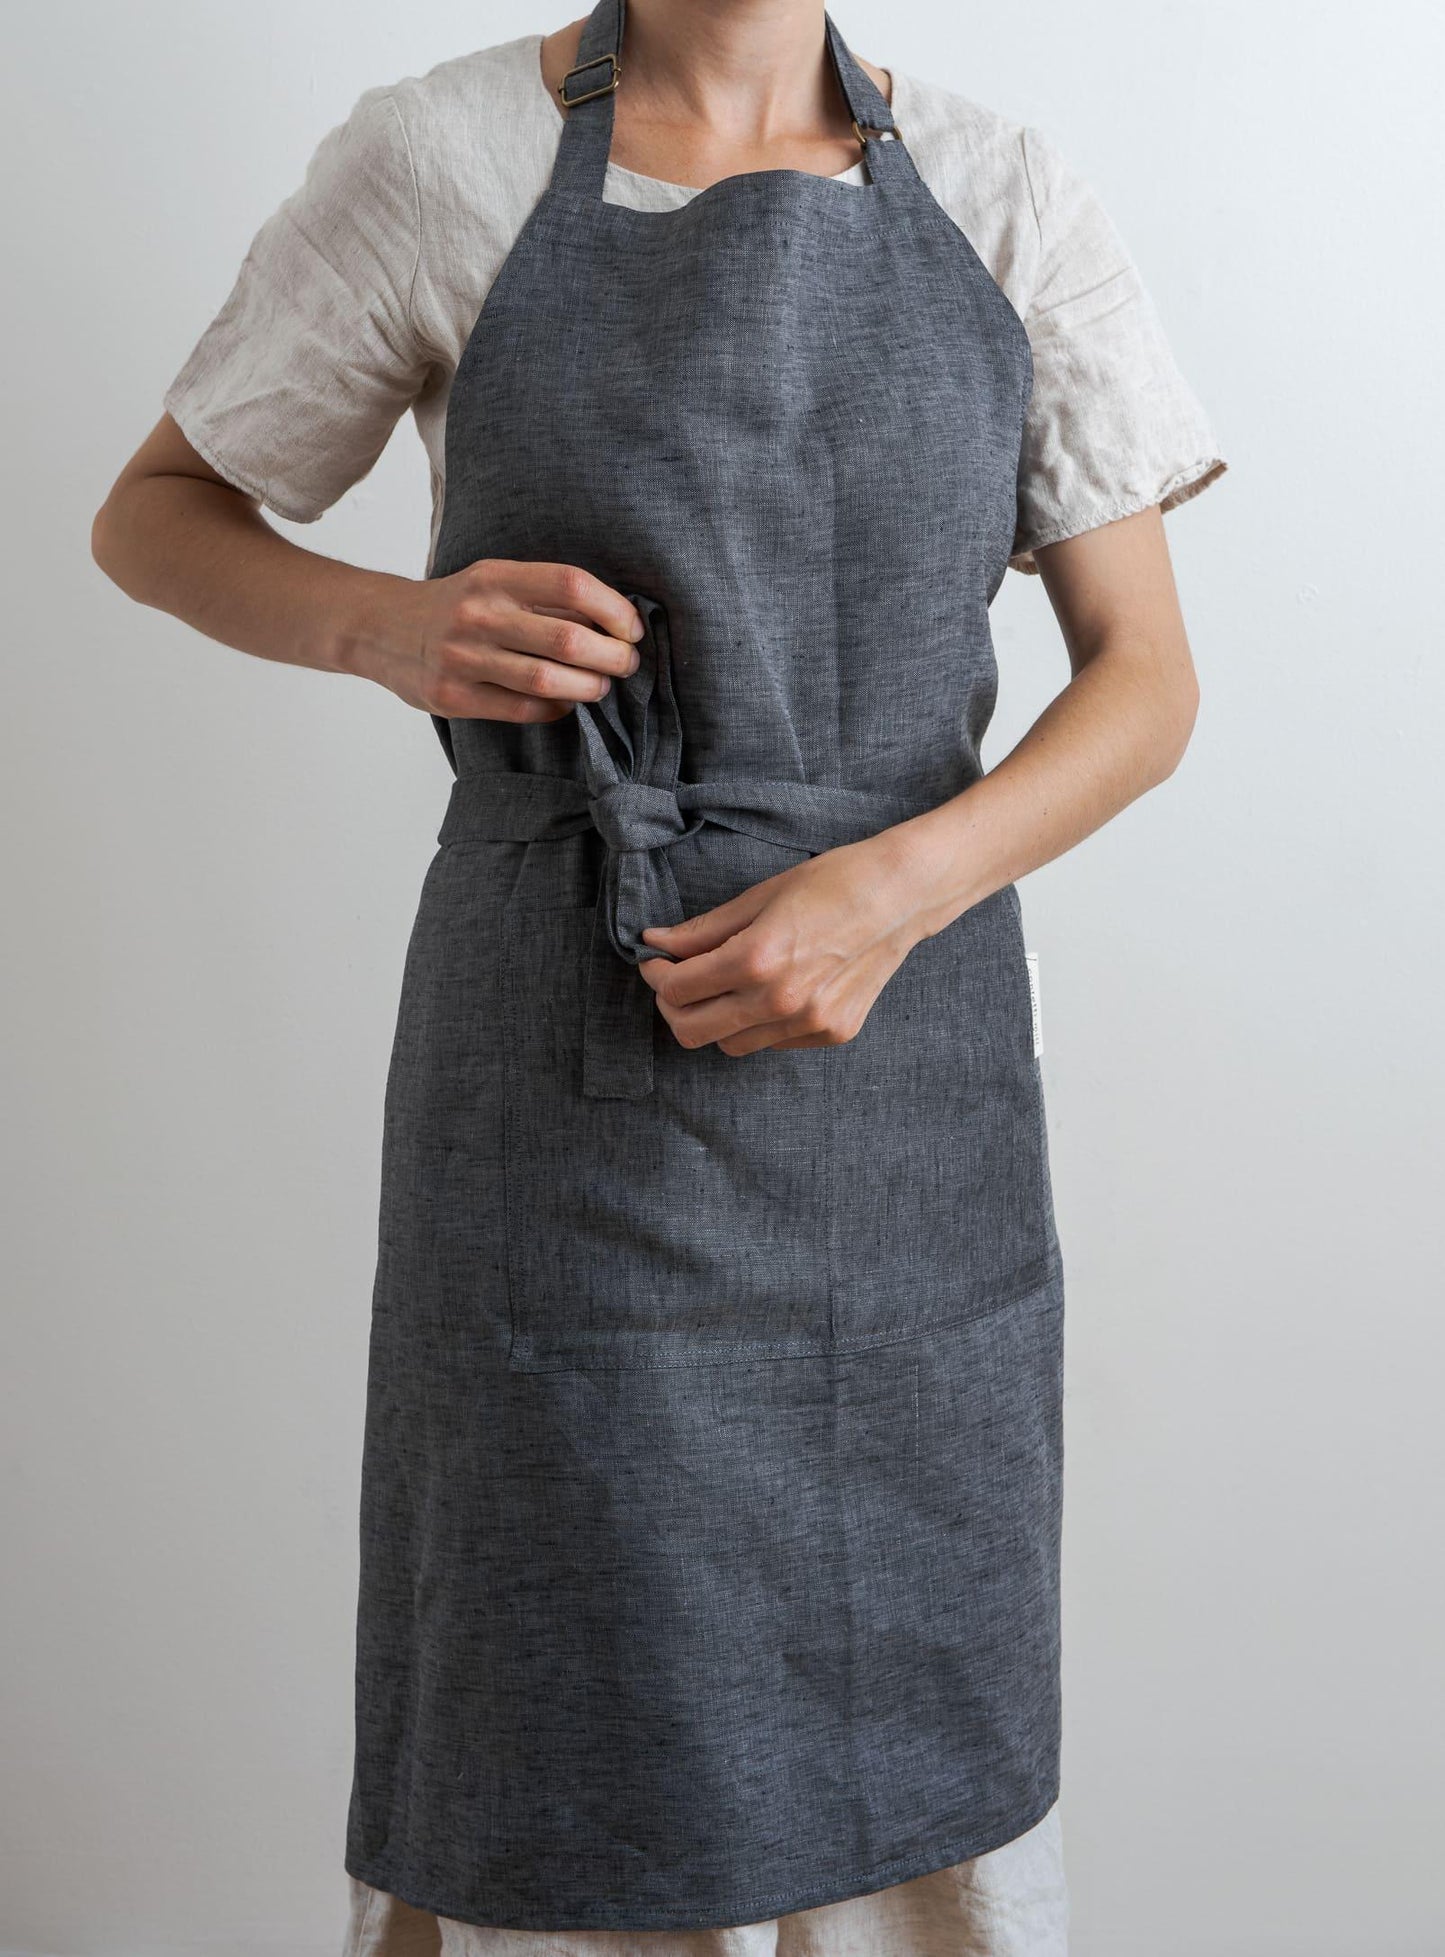 woman tying a grey linen apron